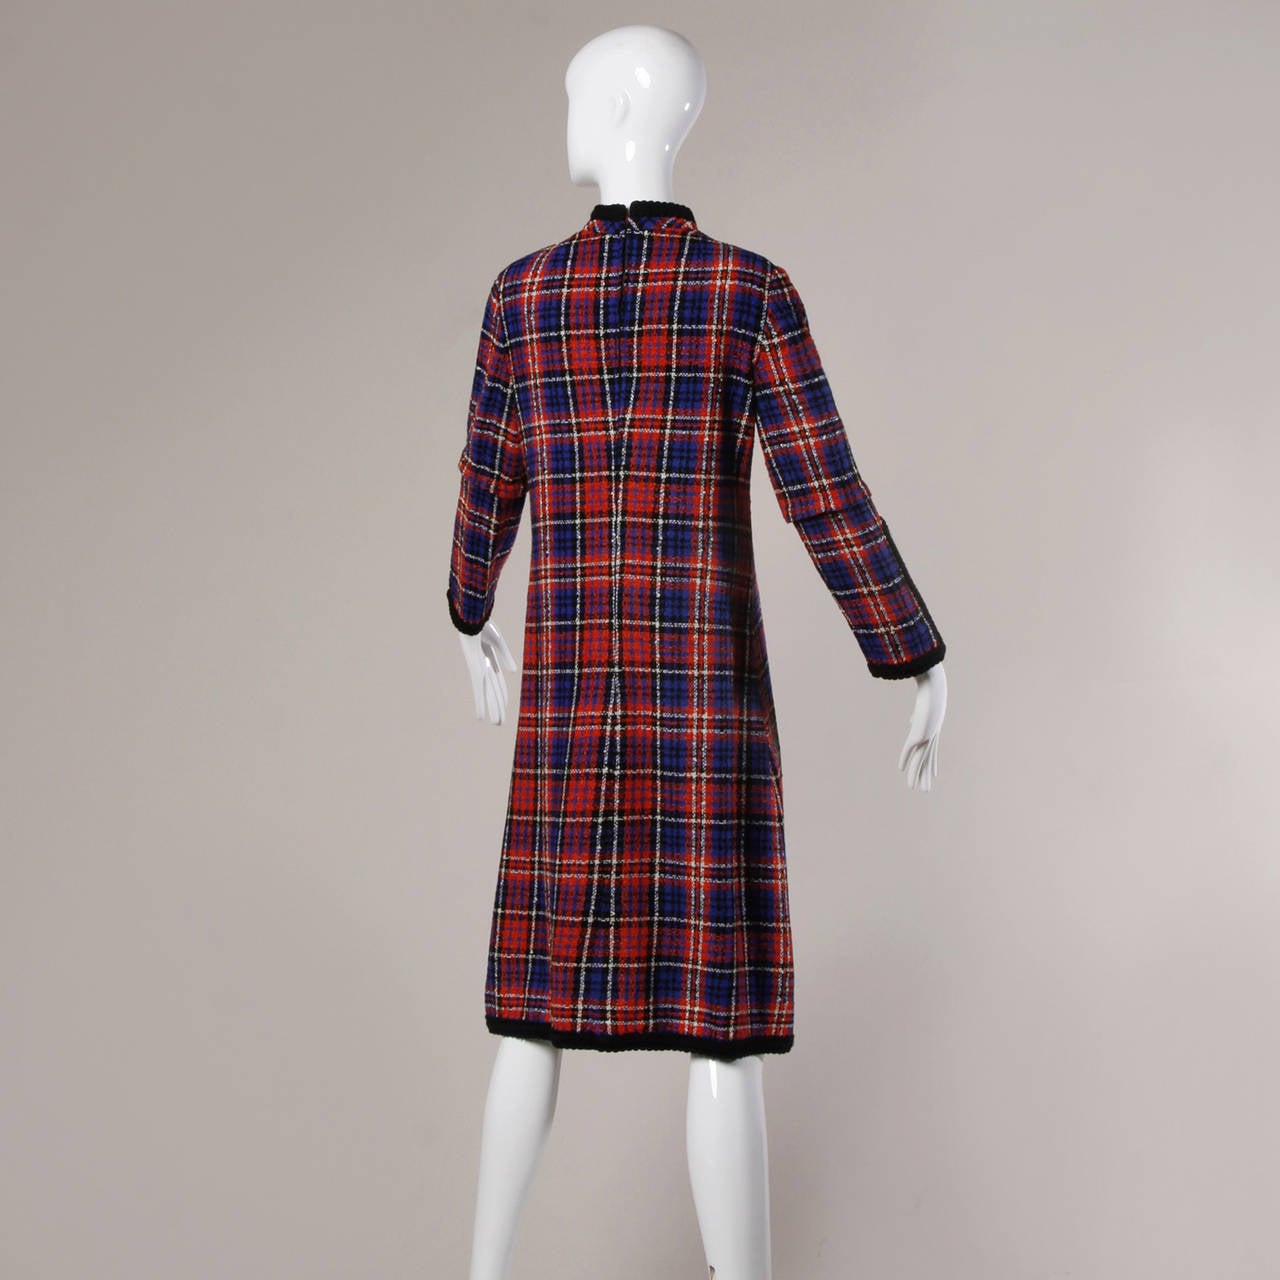 Oscar de la Renta Vintage 1960s Plaid Dress 1